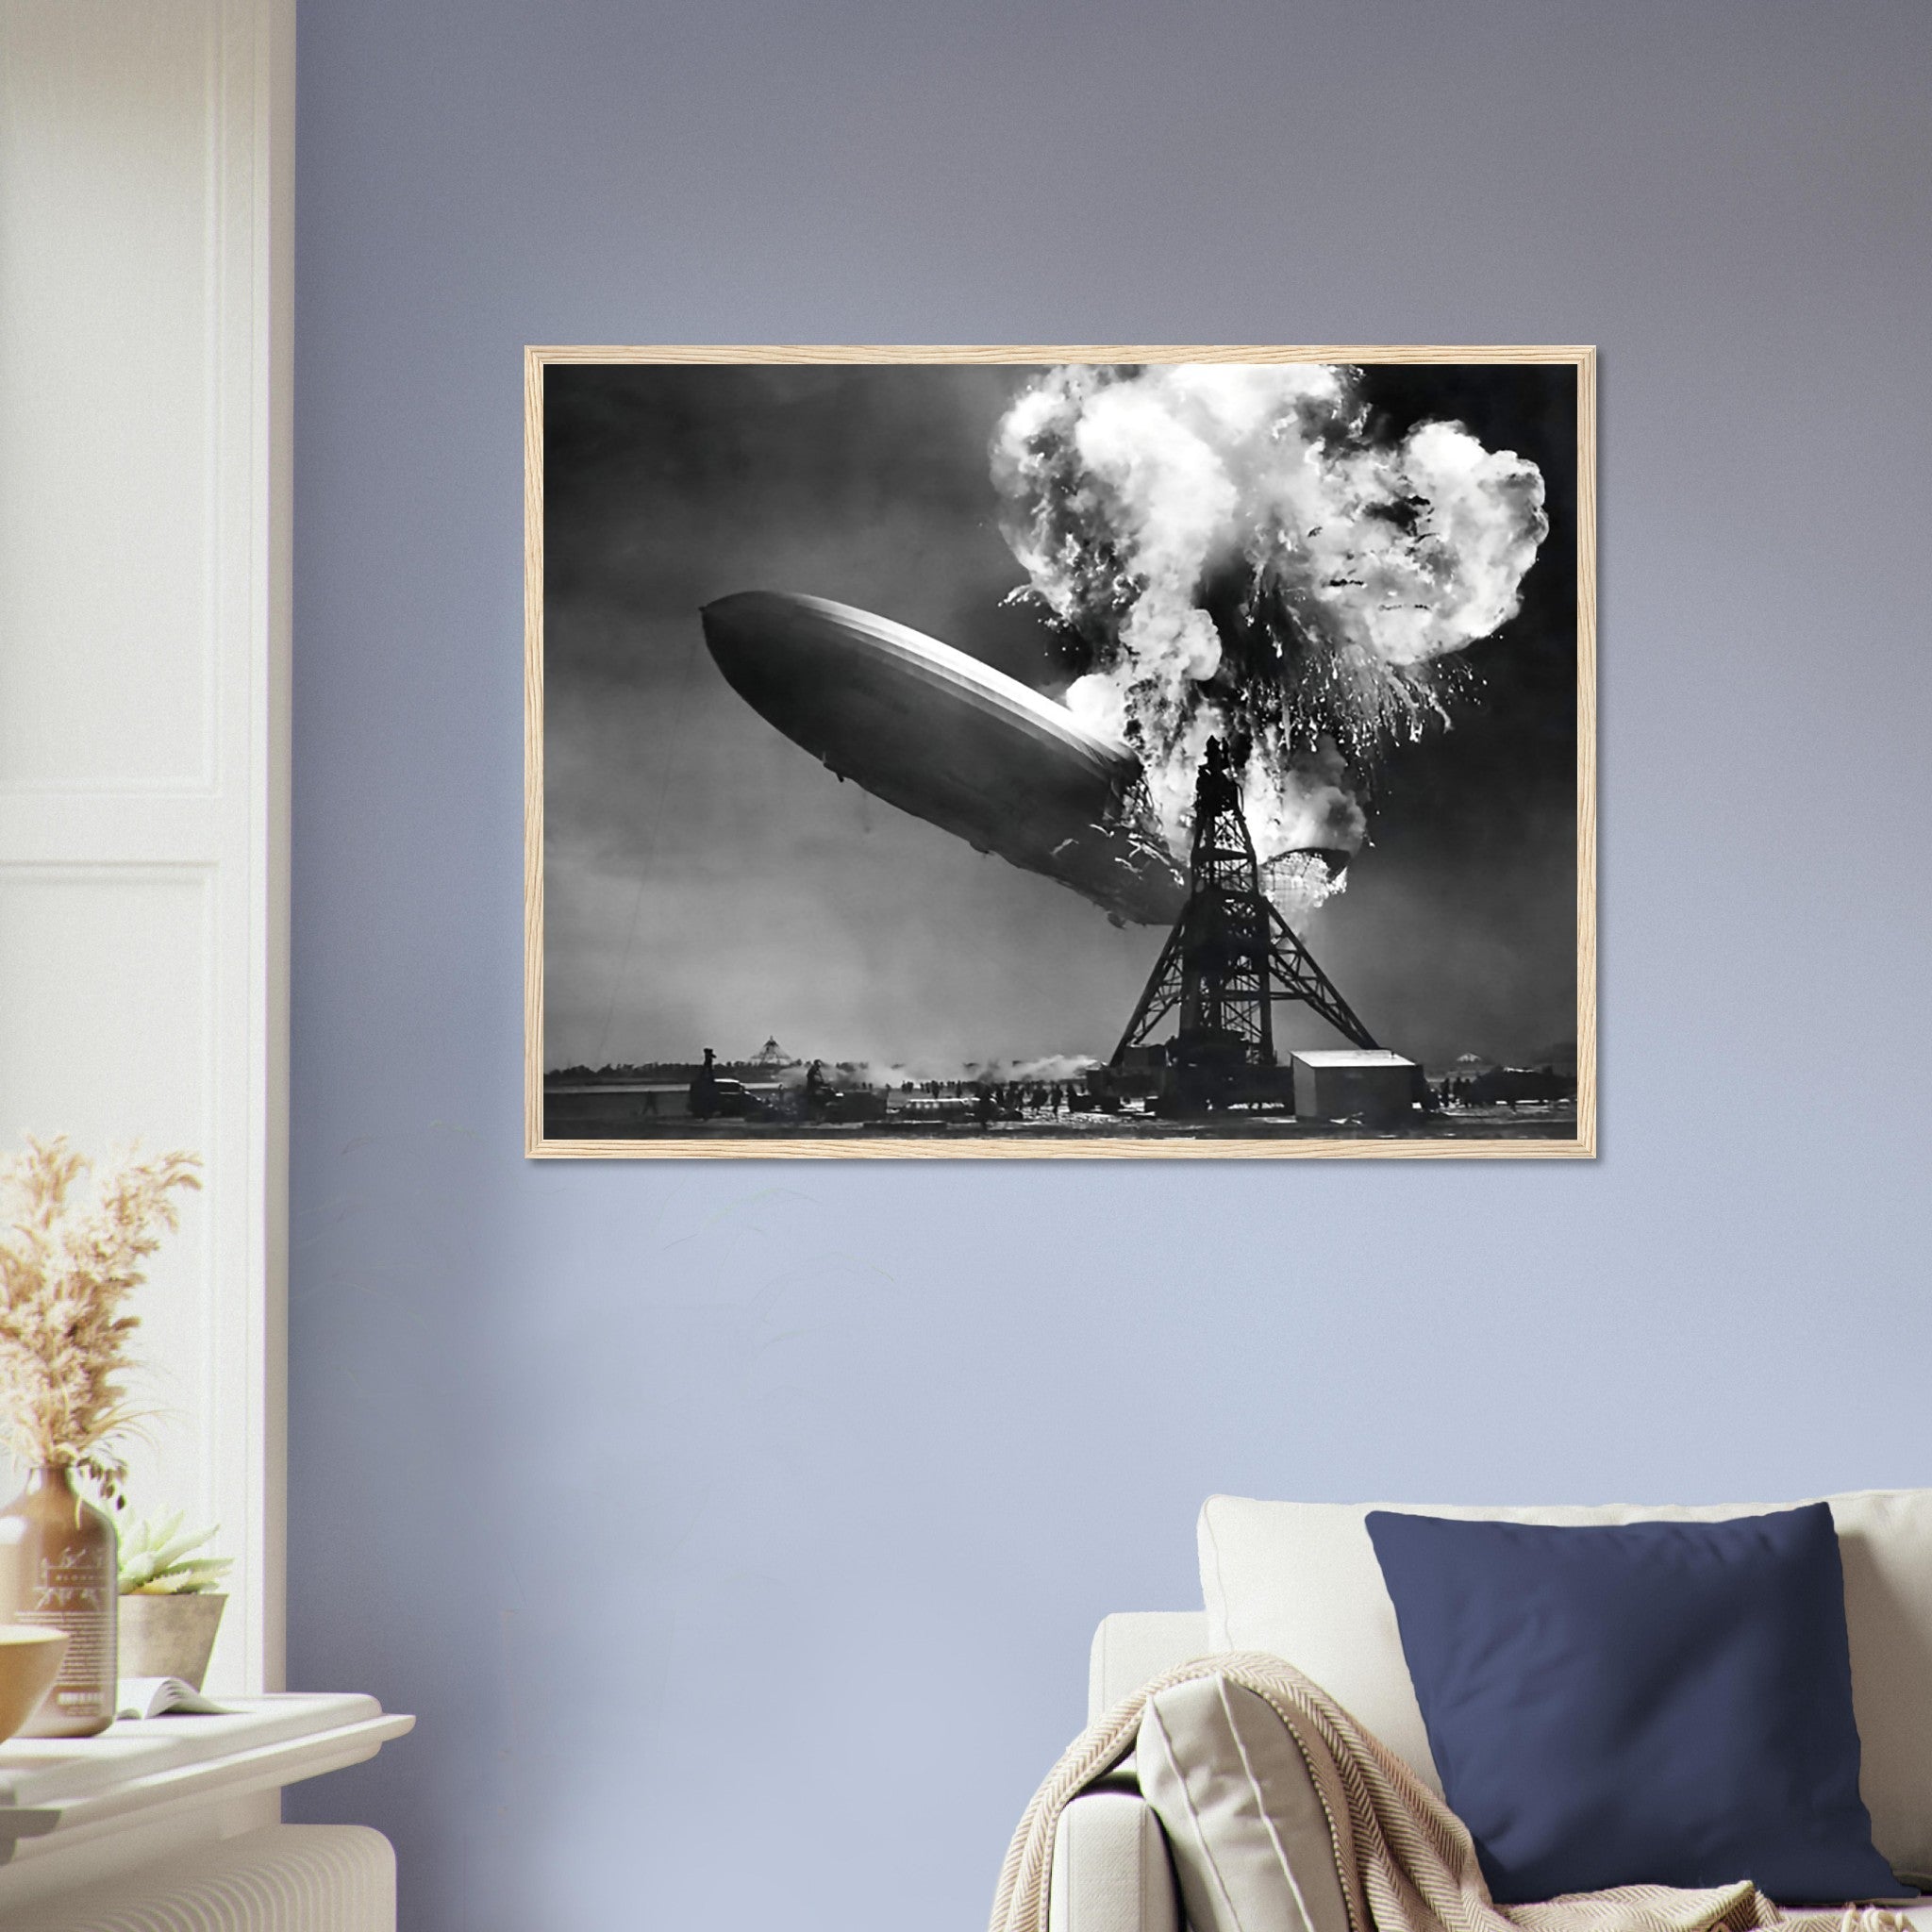 Hindenburg Disaster Framed, Famous Photo Framed Print From 1937, Vintage Wall Art - Hindenburg Zeppelin Explodes - WallArtPrints4U